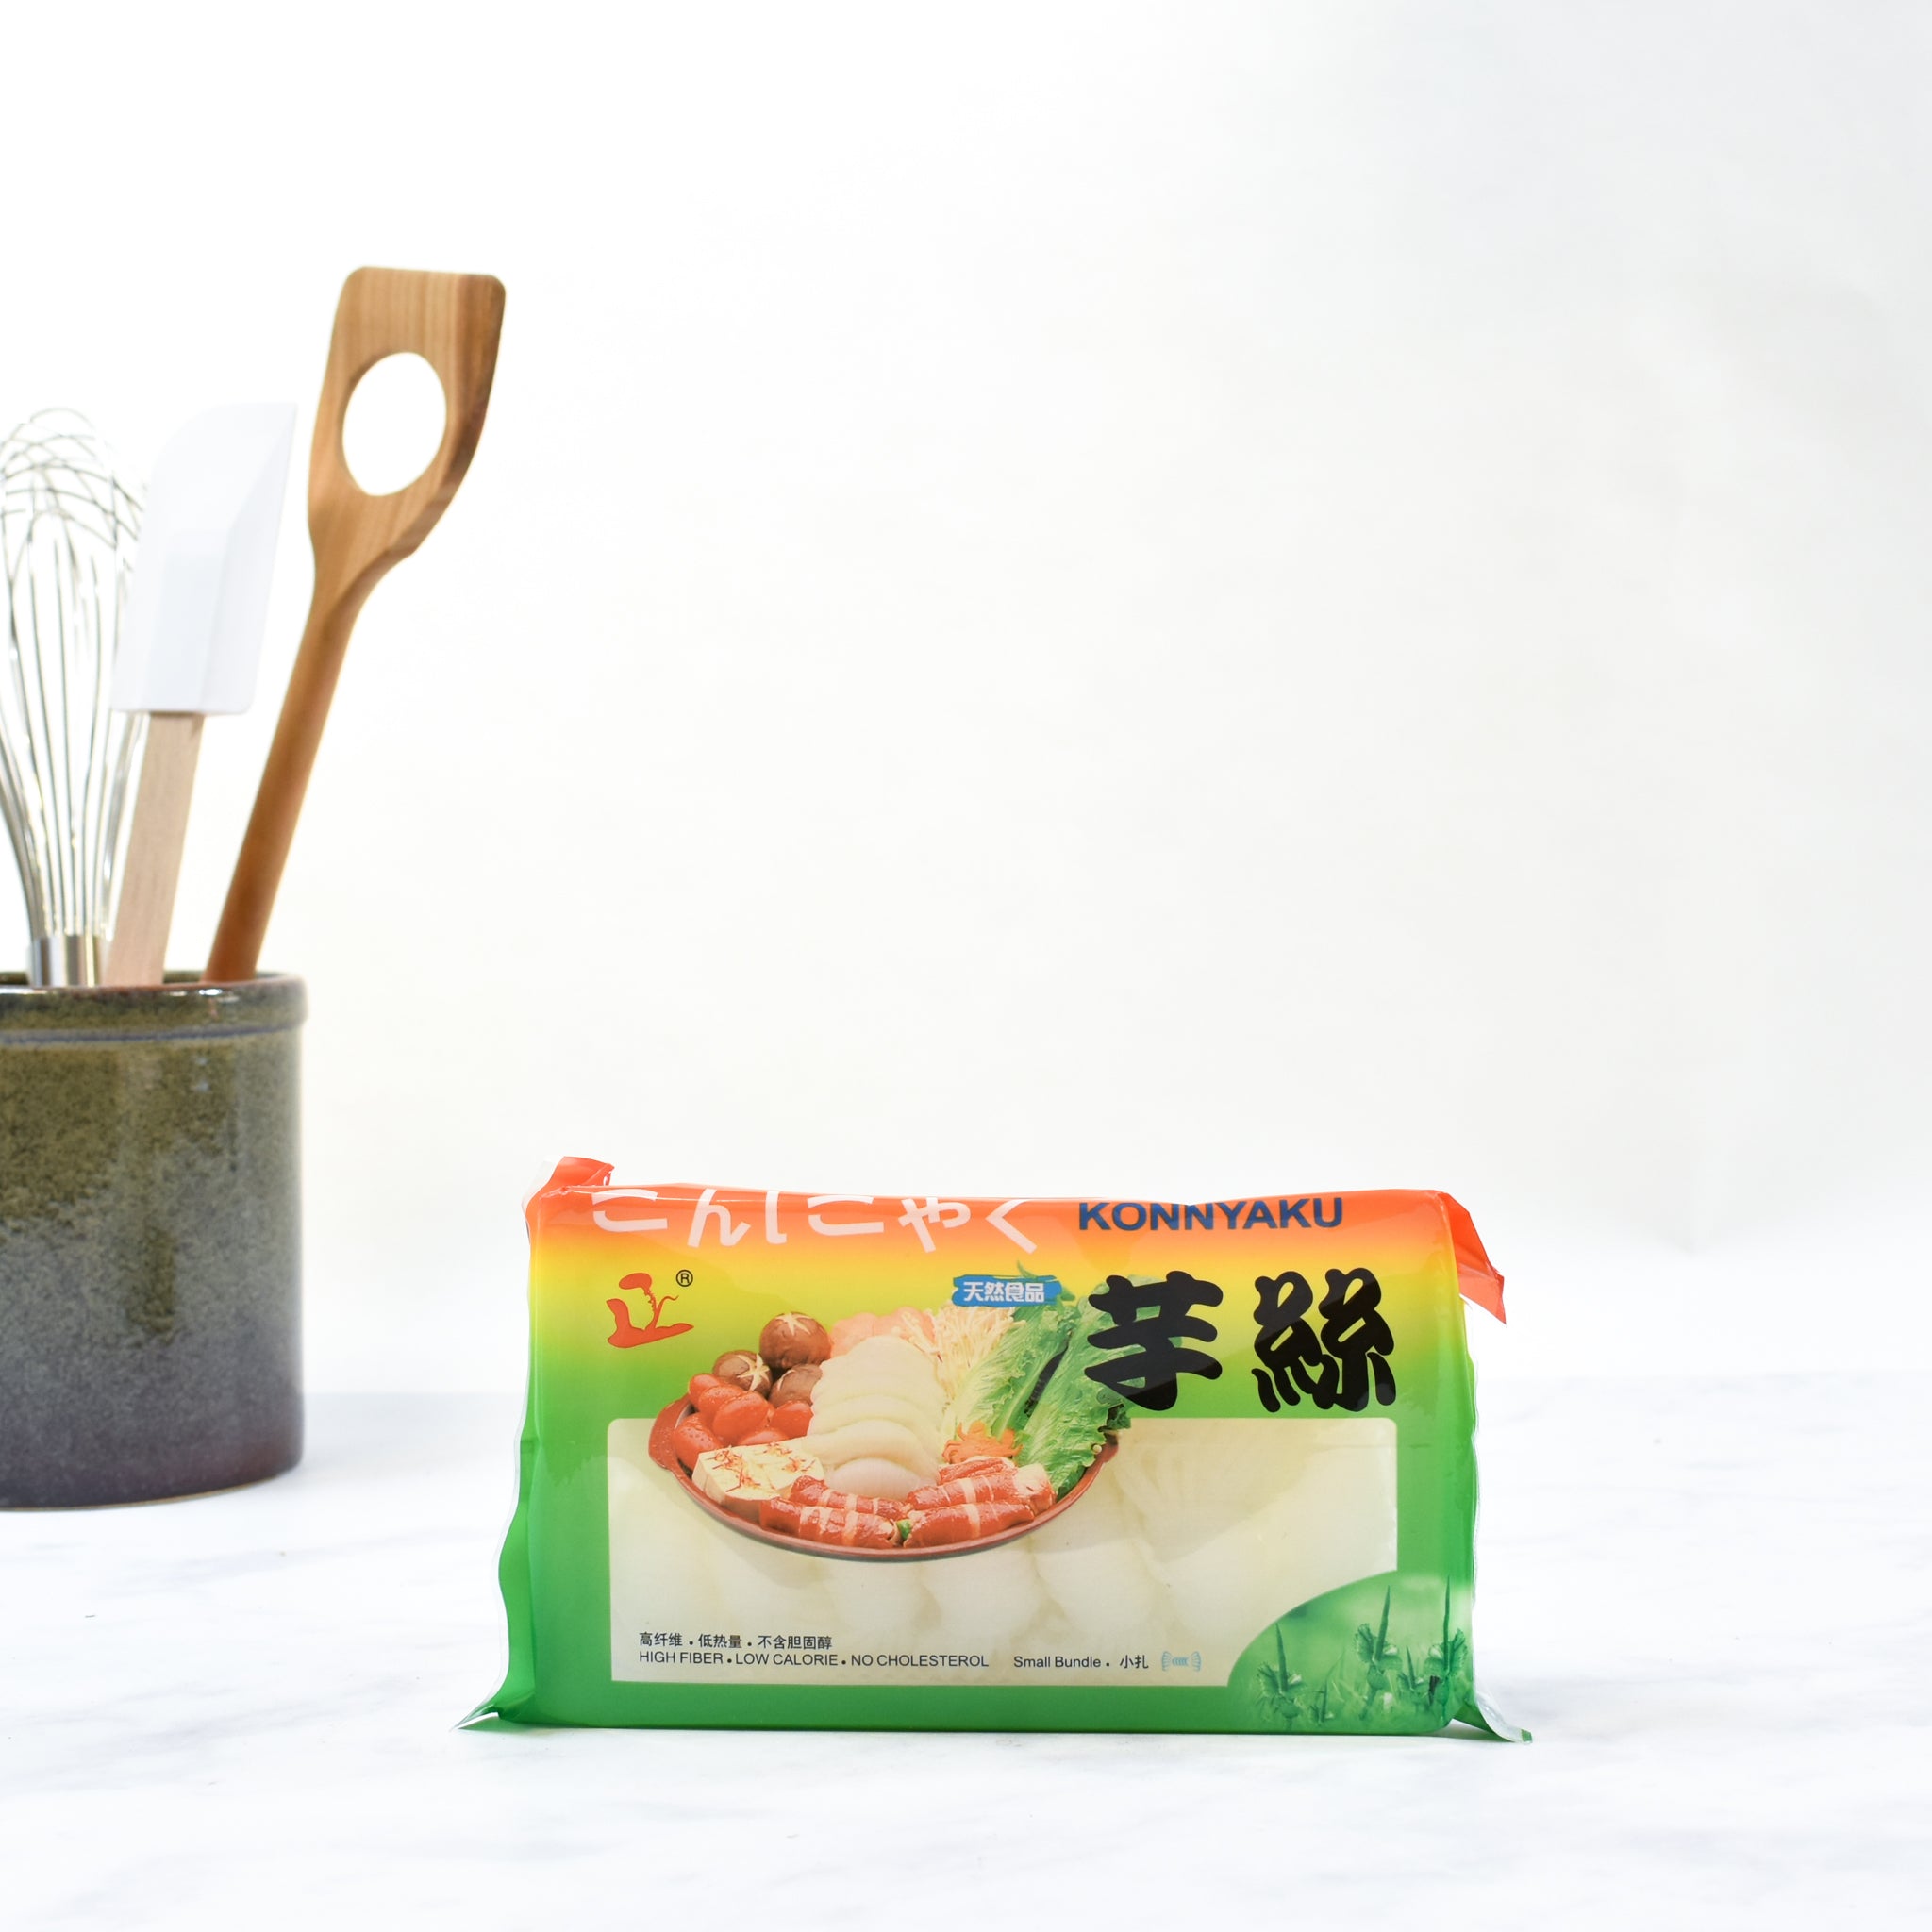 Knot Yam Noodle Shirataki Konnyaku Noodle Nests Buy